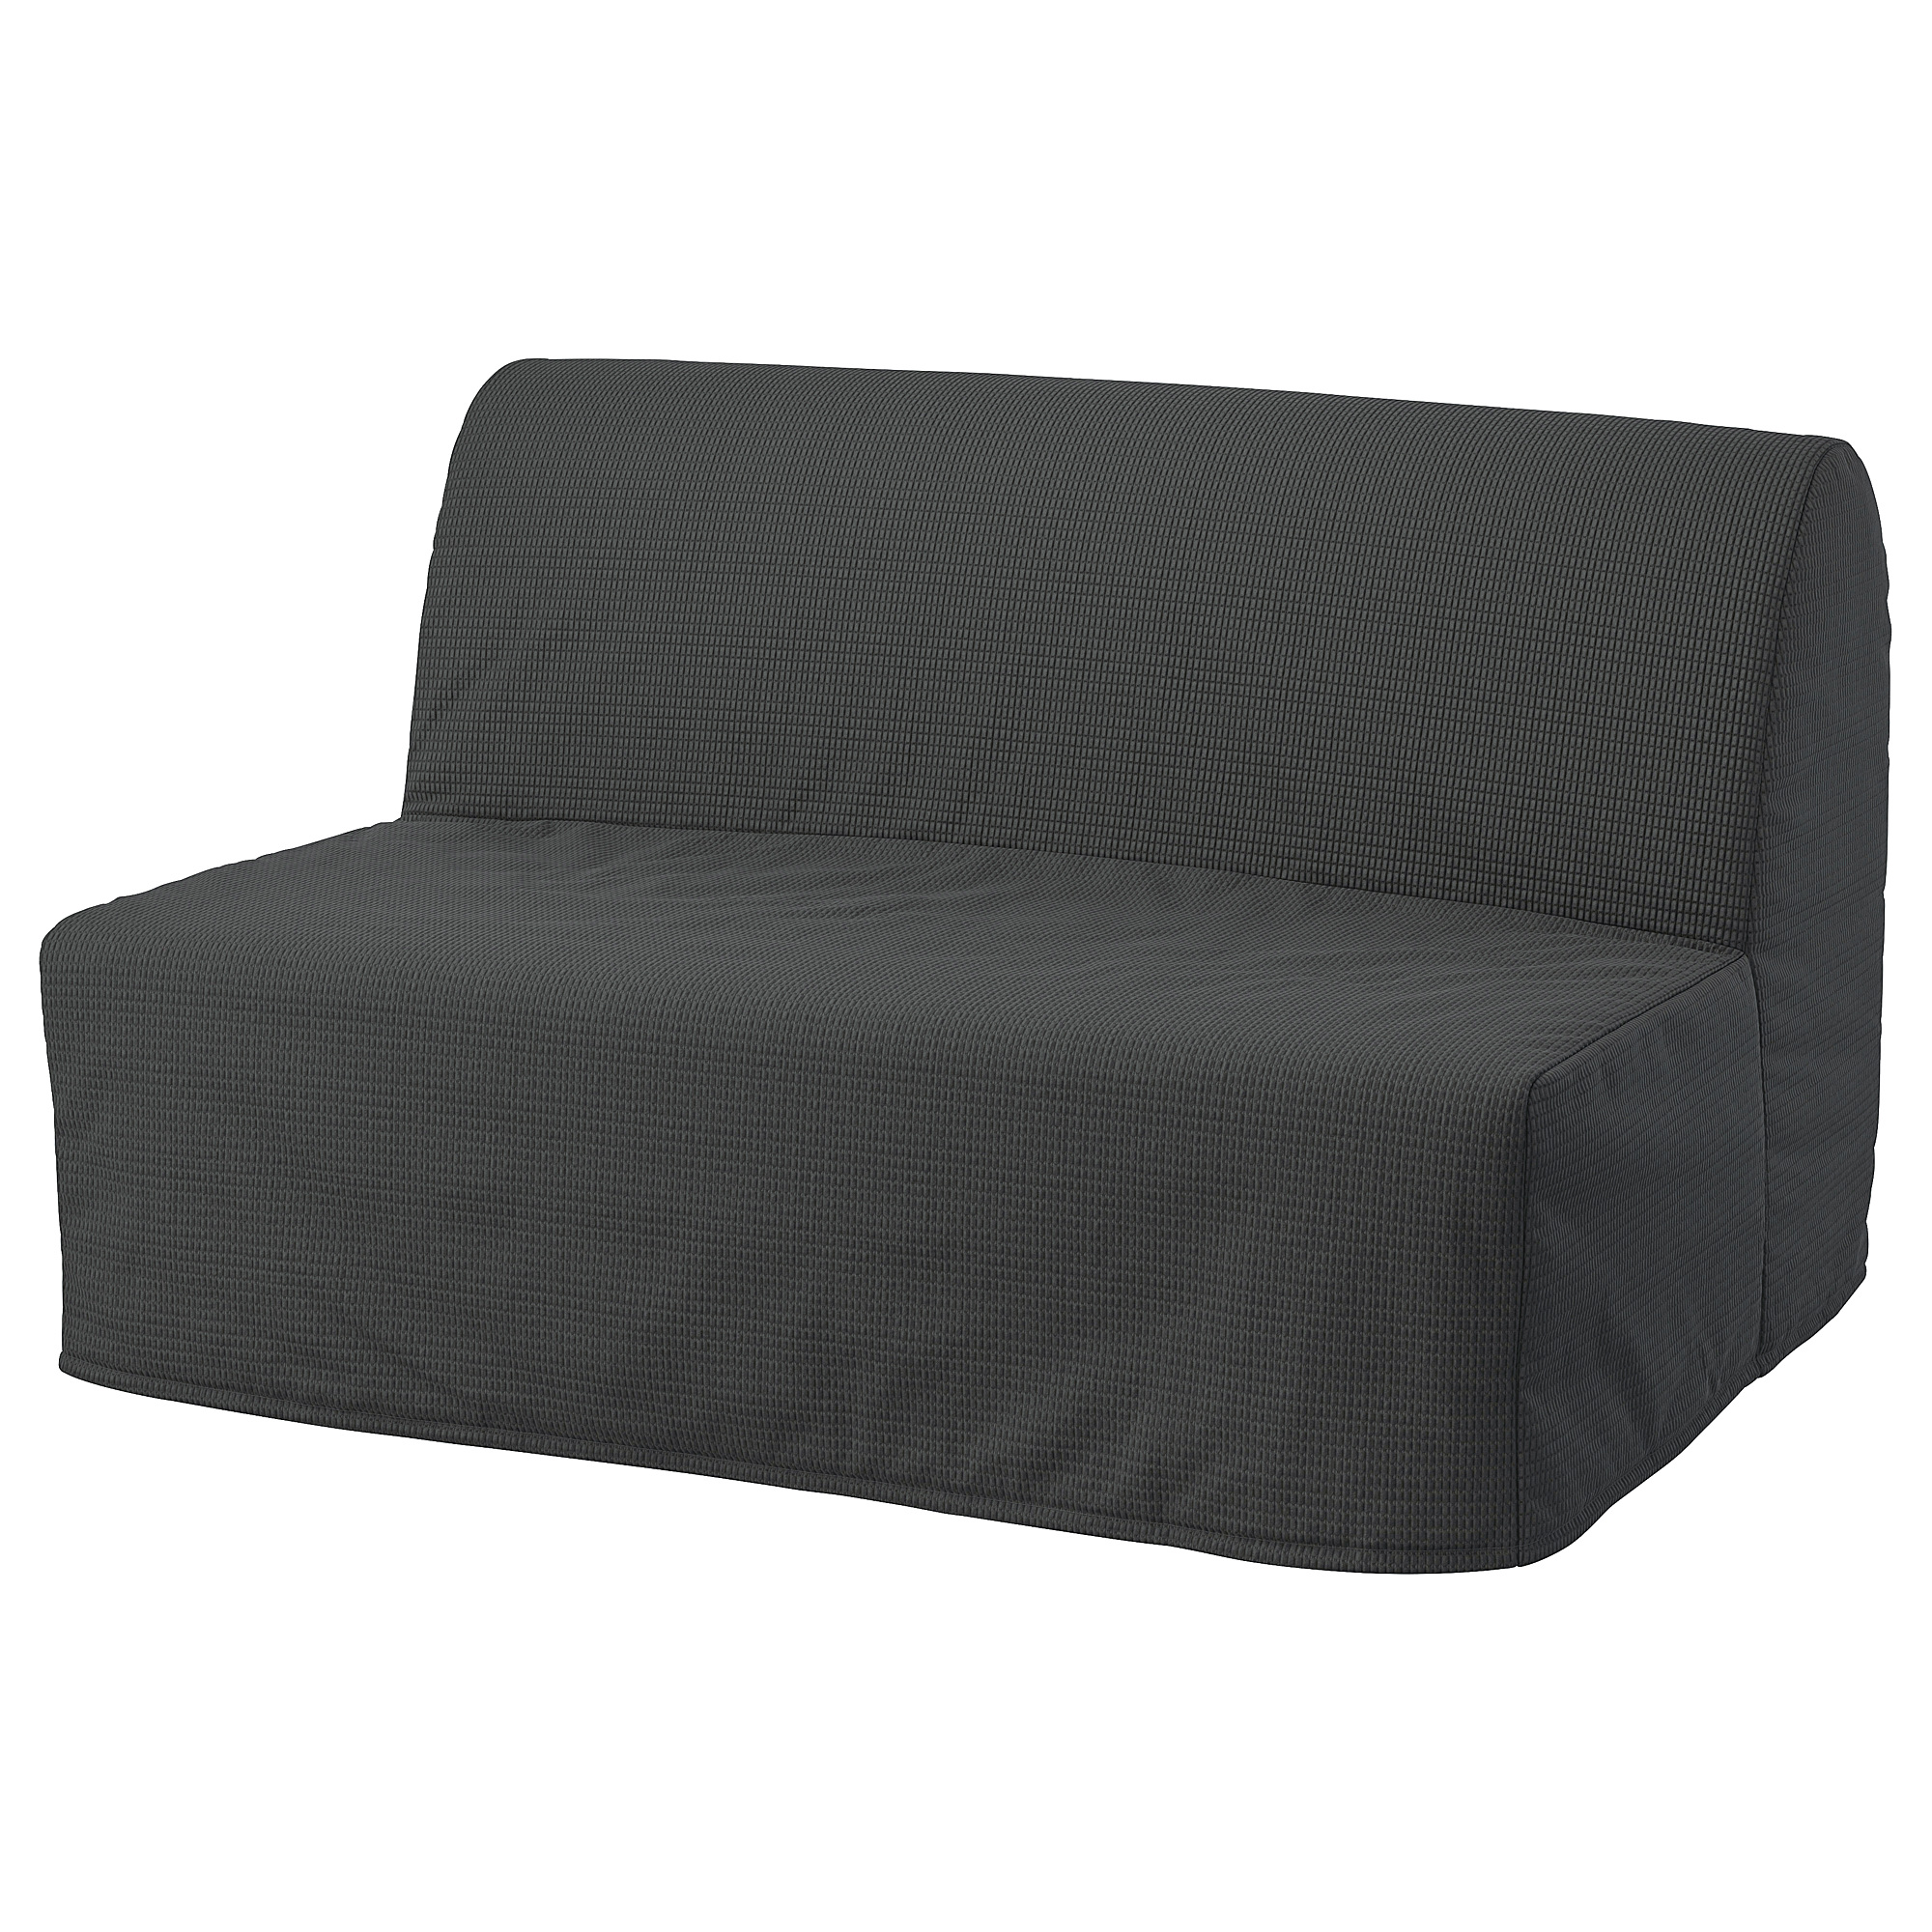 LYCKSELE LÖVÅS 2-seat sofa-bed